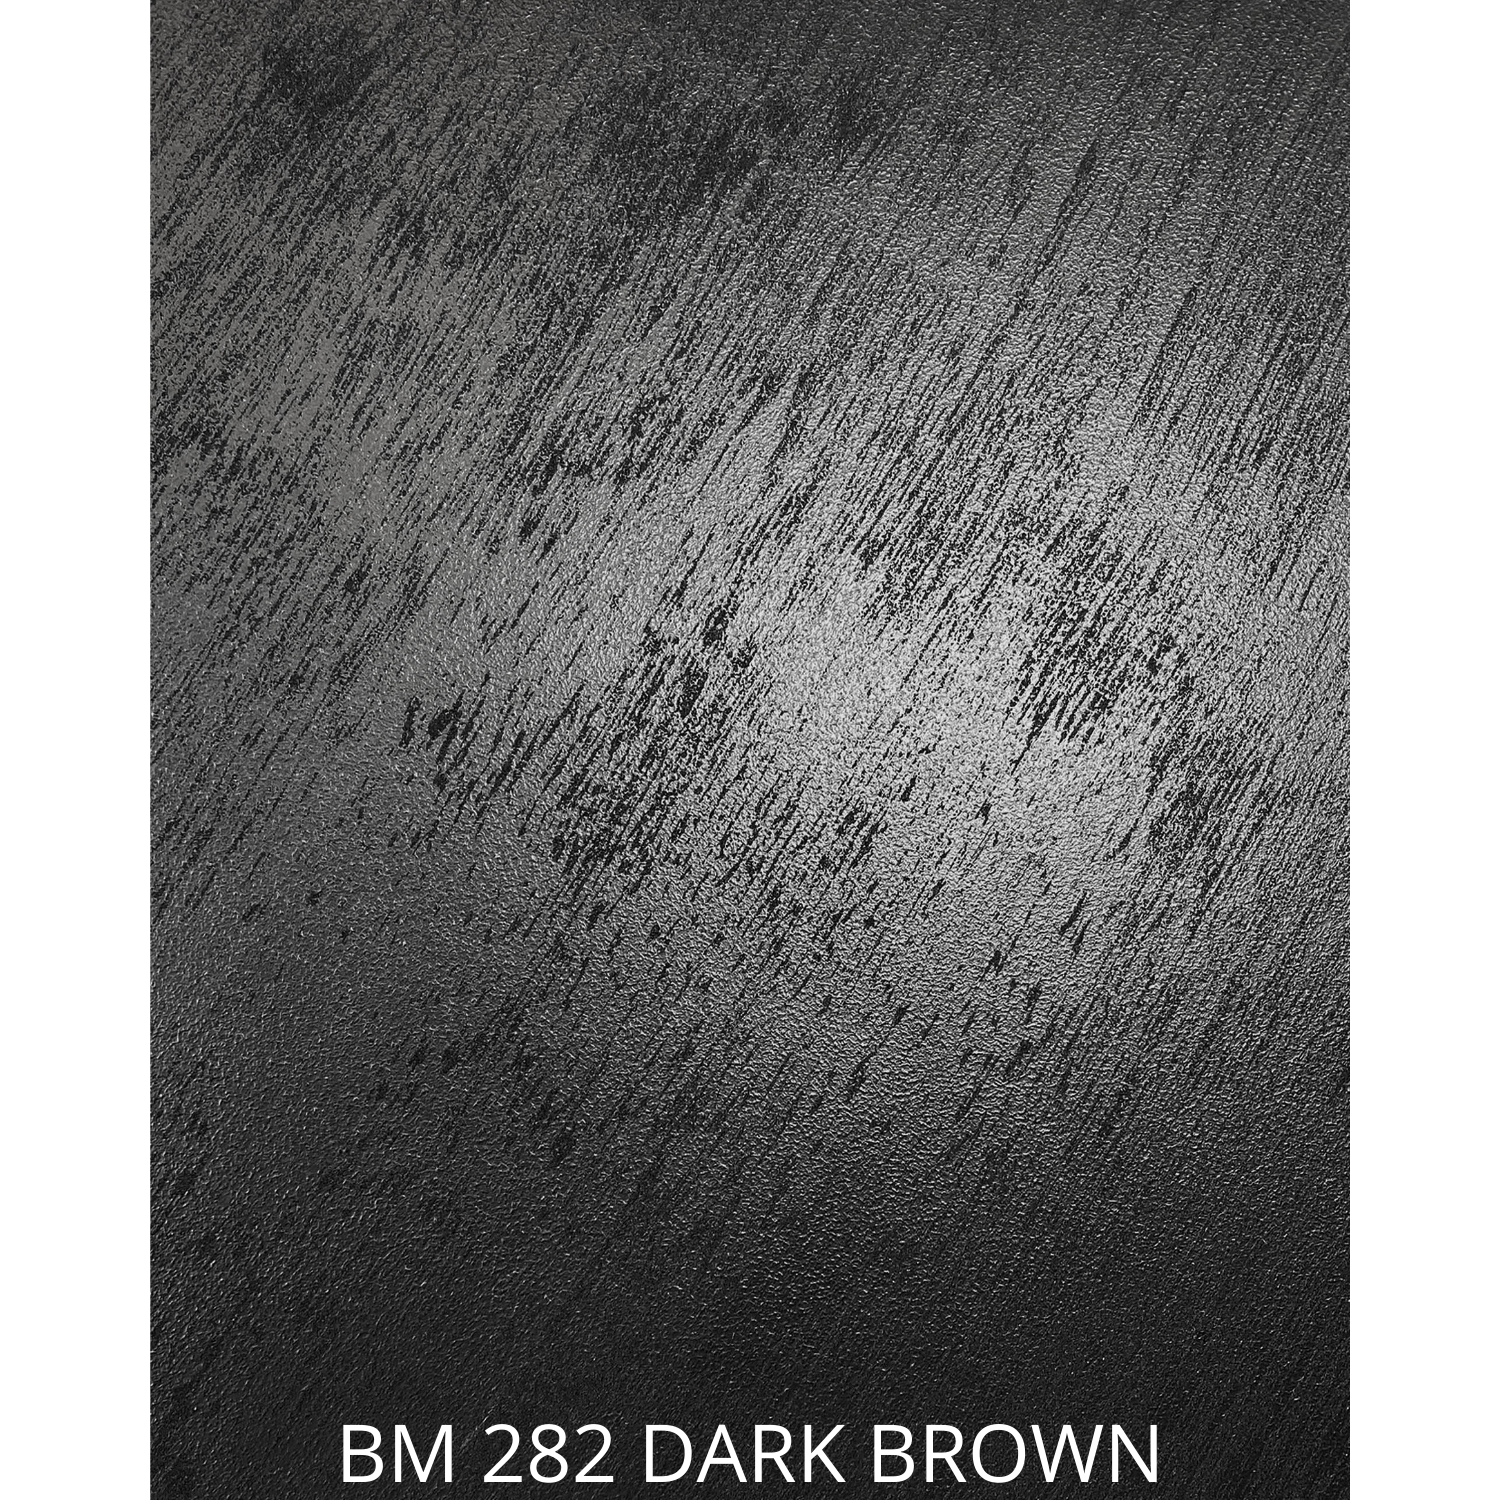 BM 282 DARK BROWN